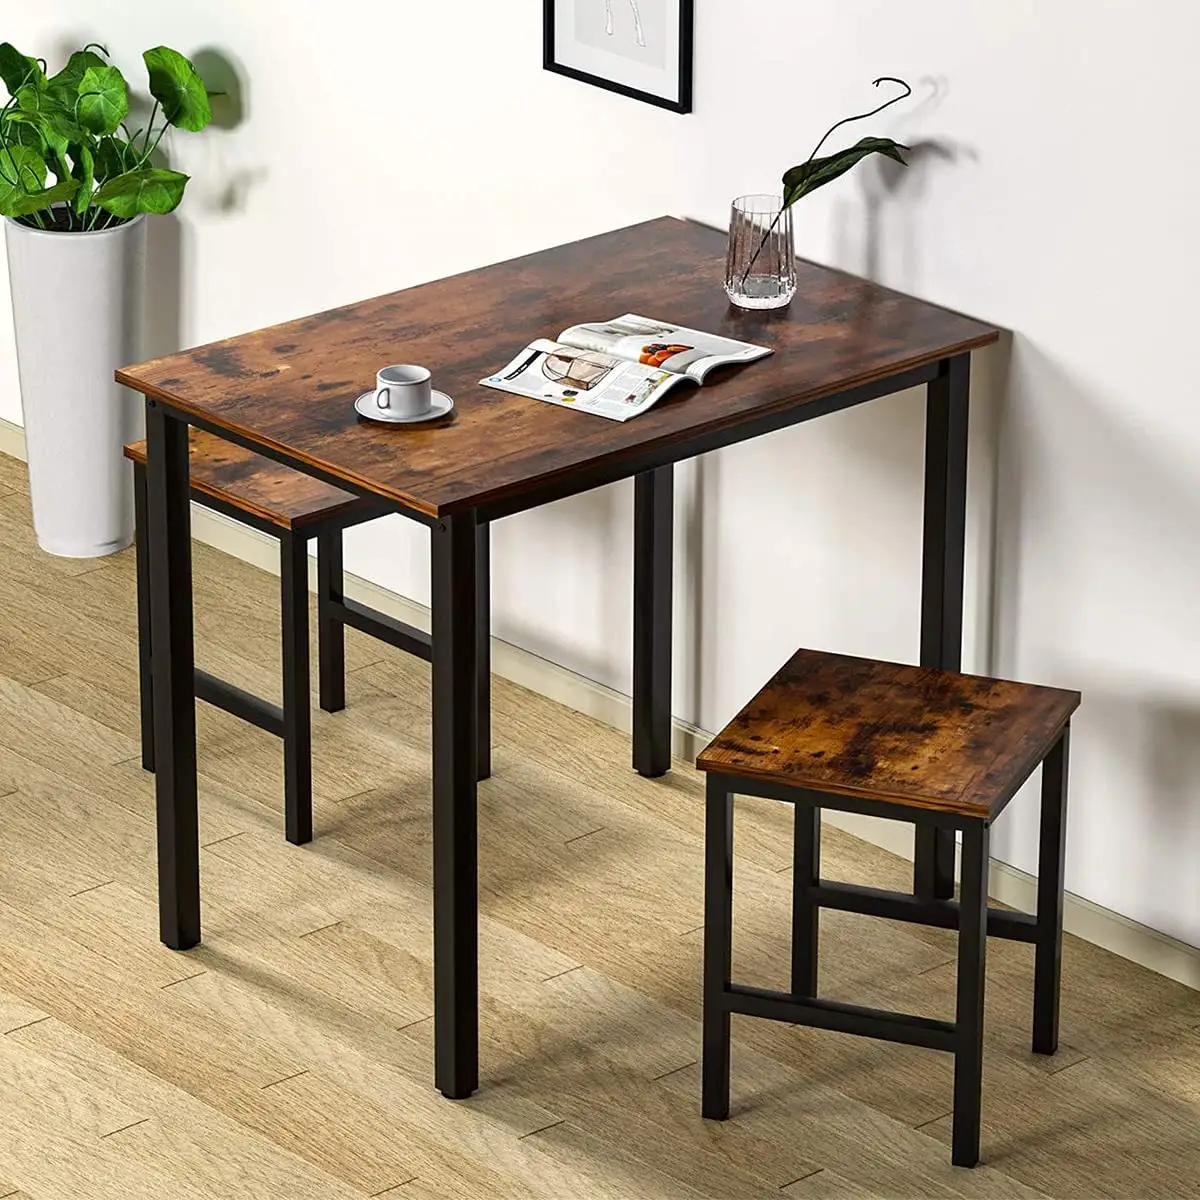 Barato preço família sala de jantar mesa de jantar madeira com duas cadeiras mesa de madeira